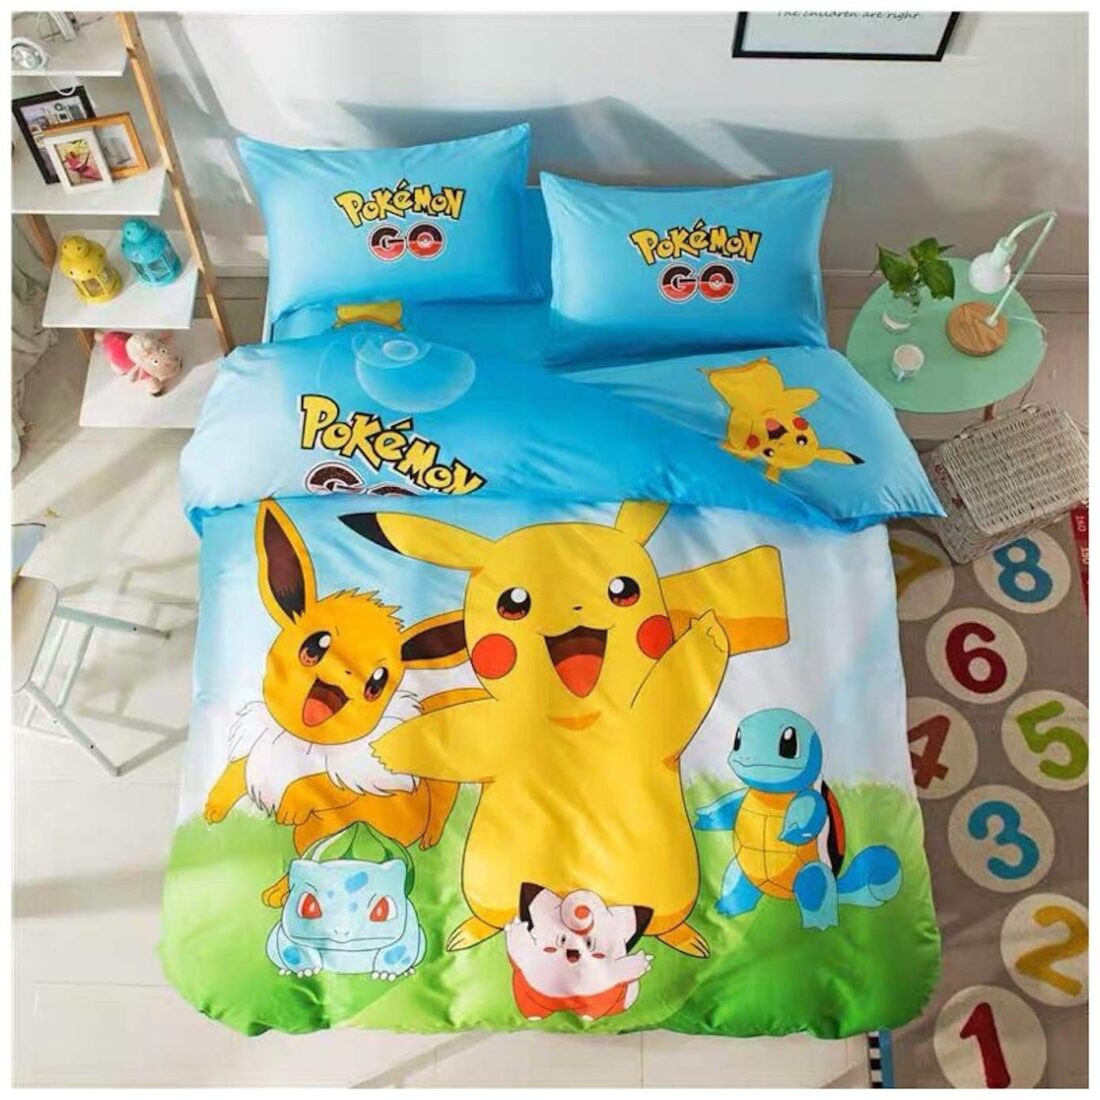 Pikachu Pokemon and Friends Duvet Cover Set - Bedding Set